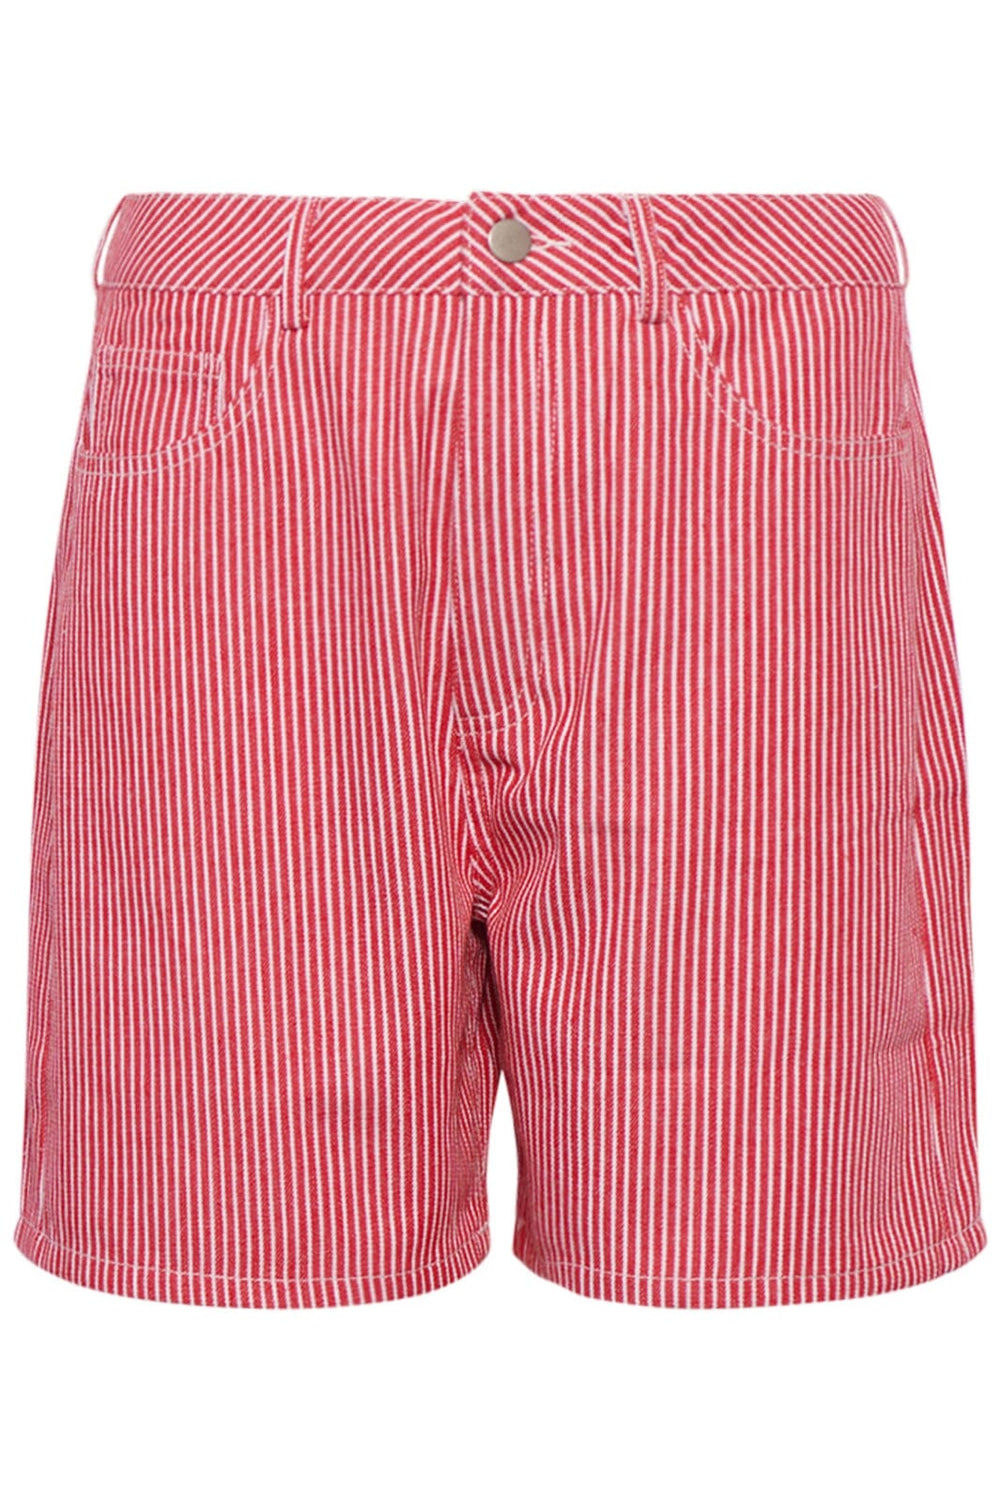 Noella - Spencer Shorts - 995 Red/White Stripe Shorts 